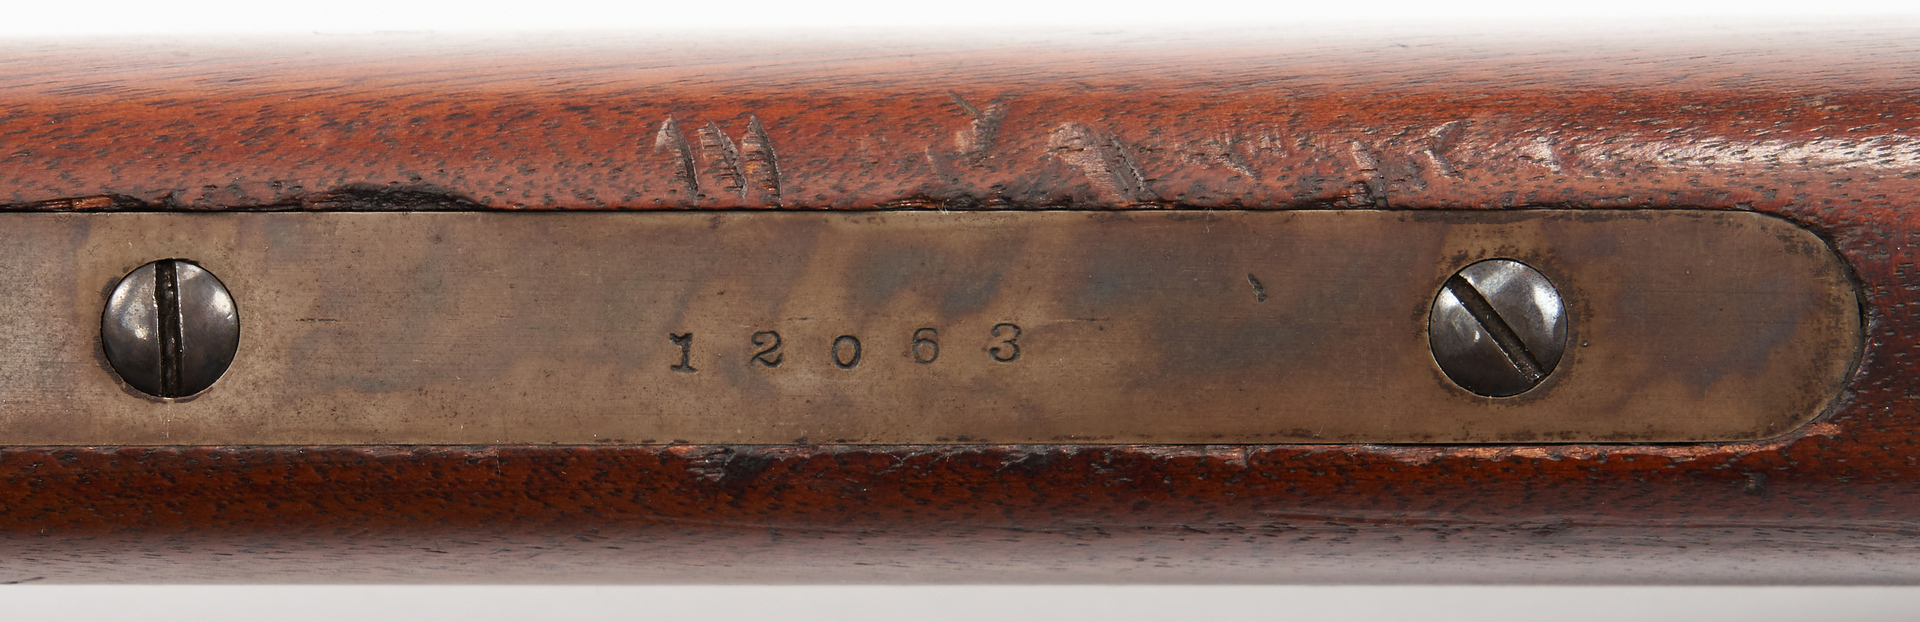 Lot 704: Civil War Mass. Arms Co. 2nd Model Lever Action Carbine, .50 cal.